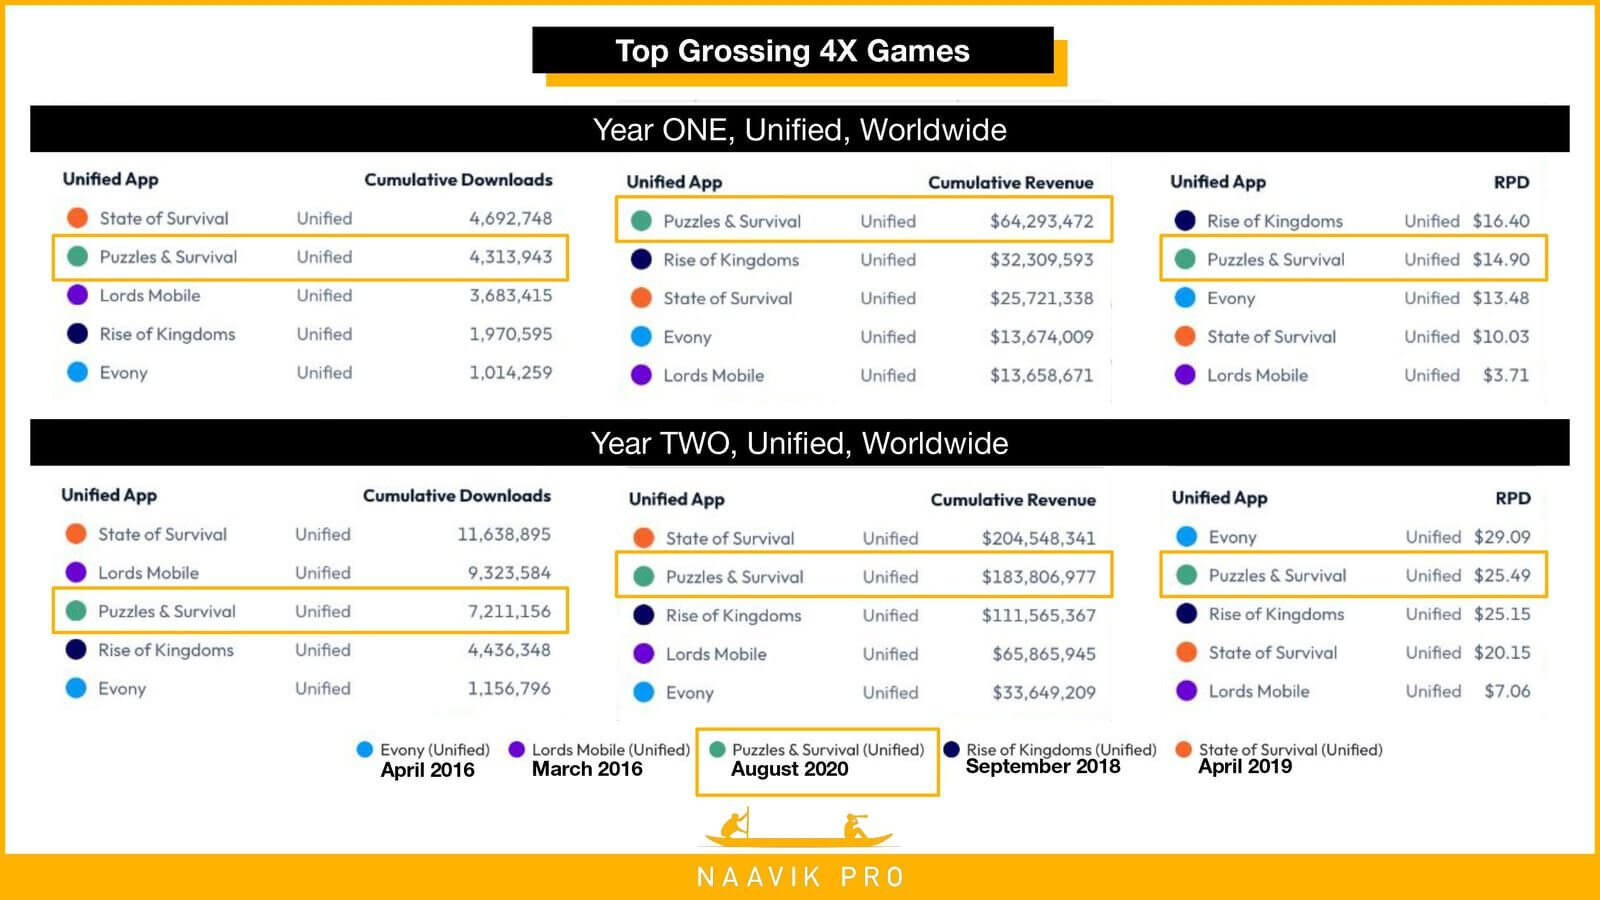 Top Grossing 4X Games